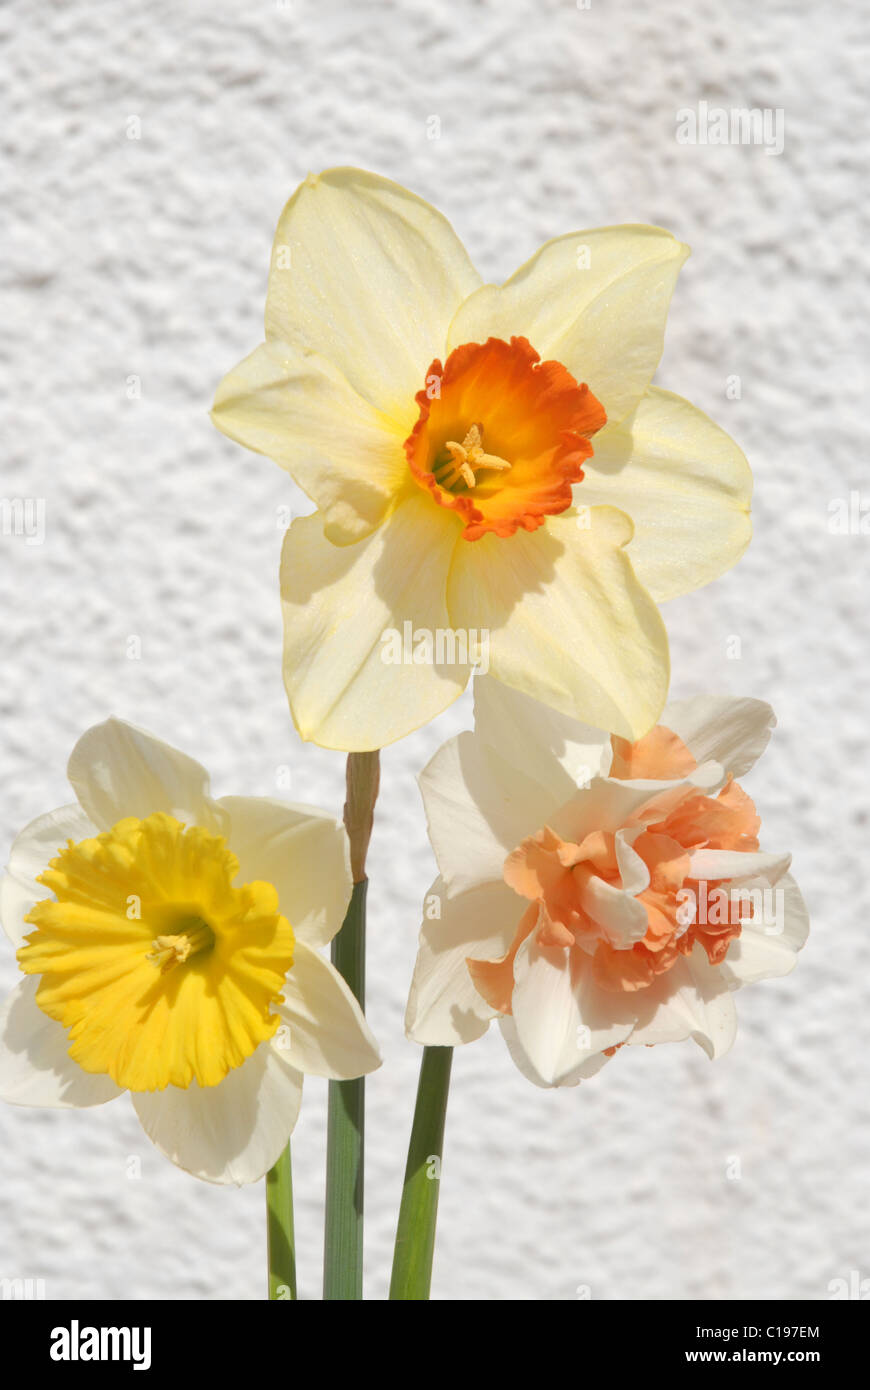 3 daffodils Stock Photo